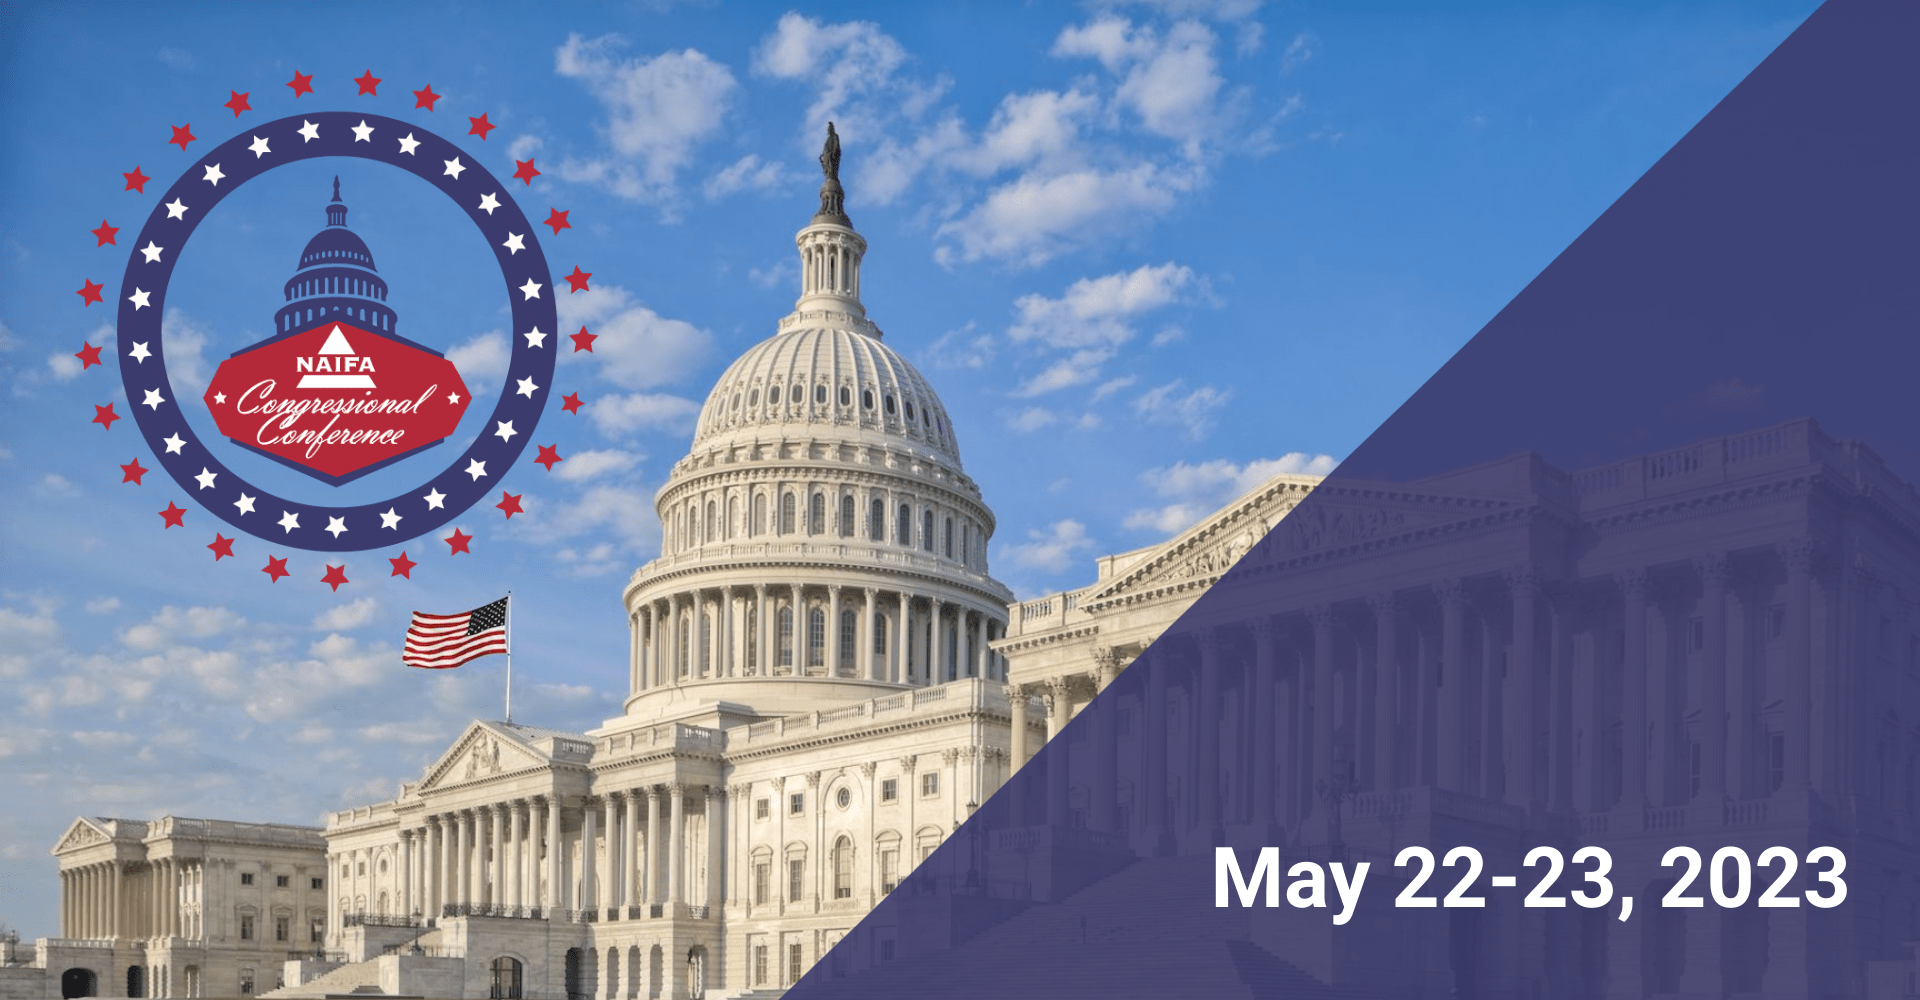 NAIFA's 2023 Congressional Conference will be held May 22-23, 2023